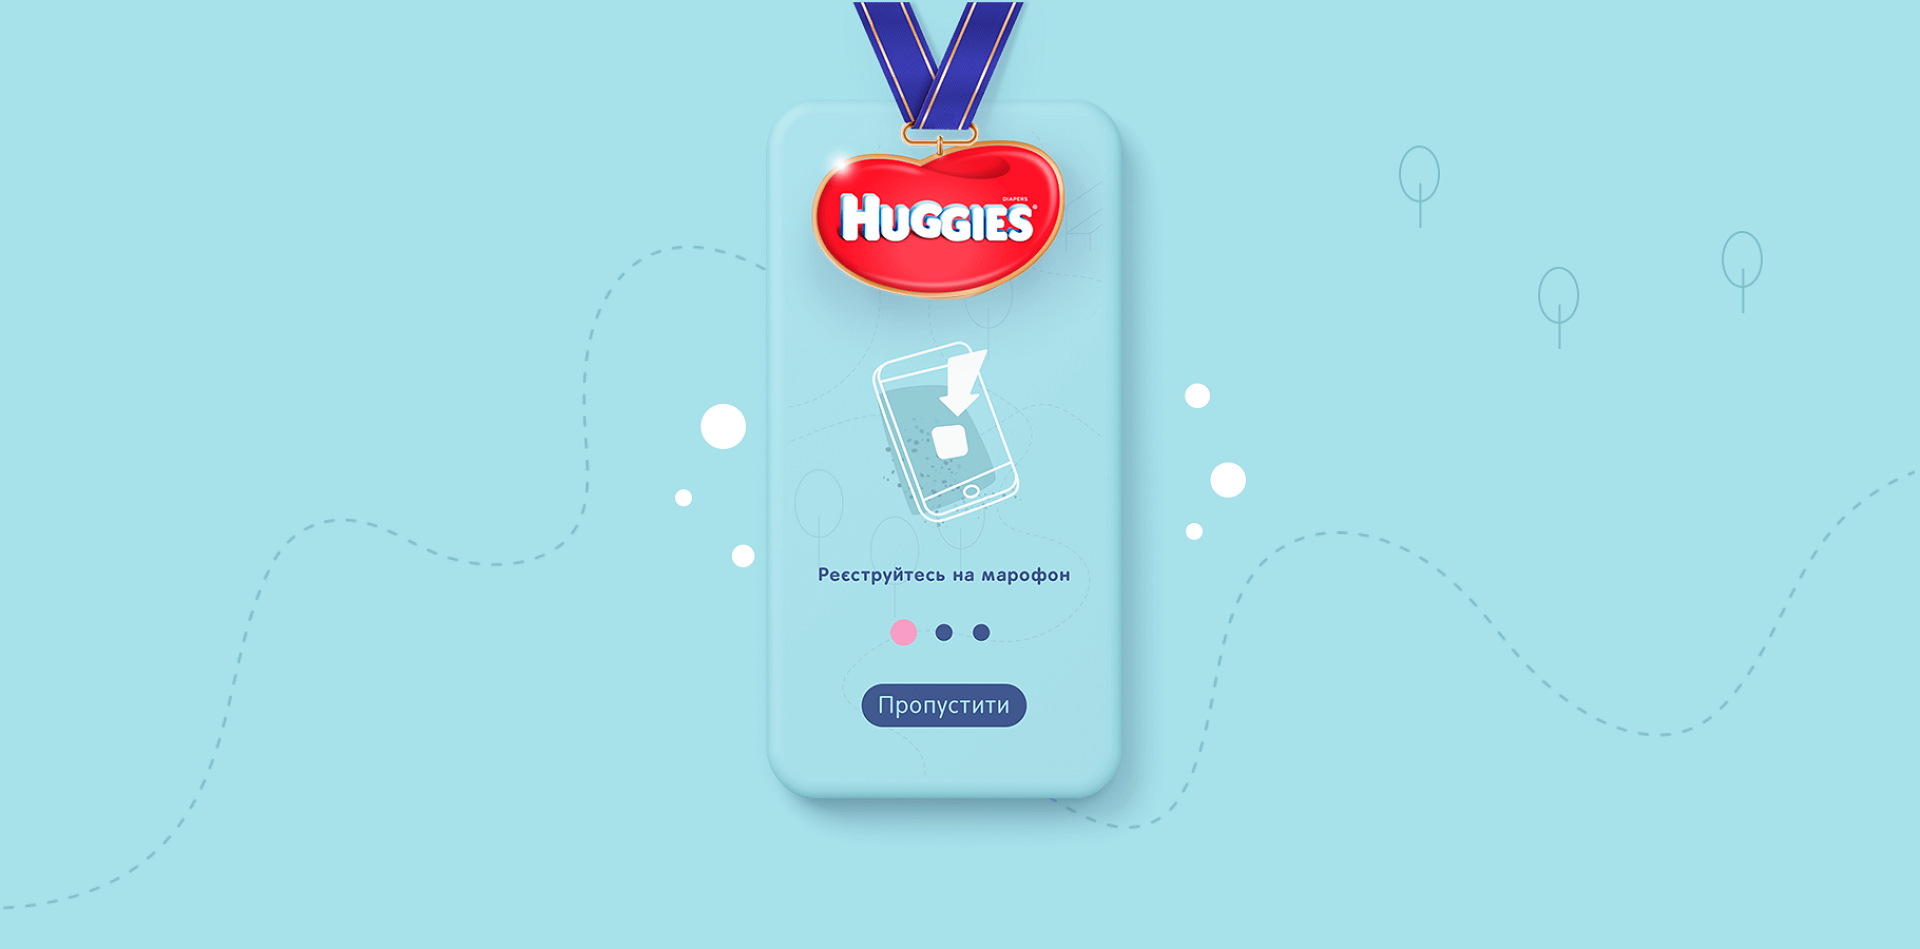 Huggies Marathon app